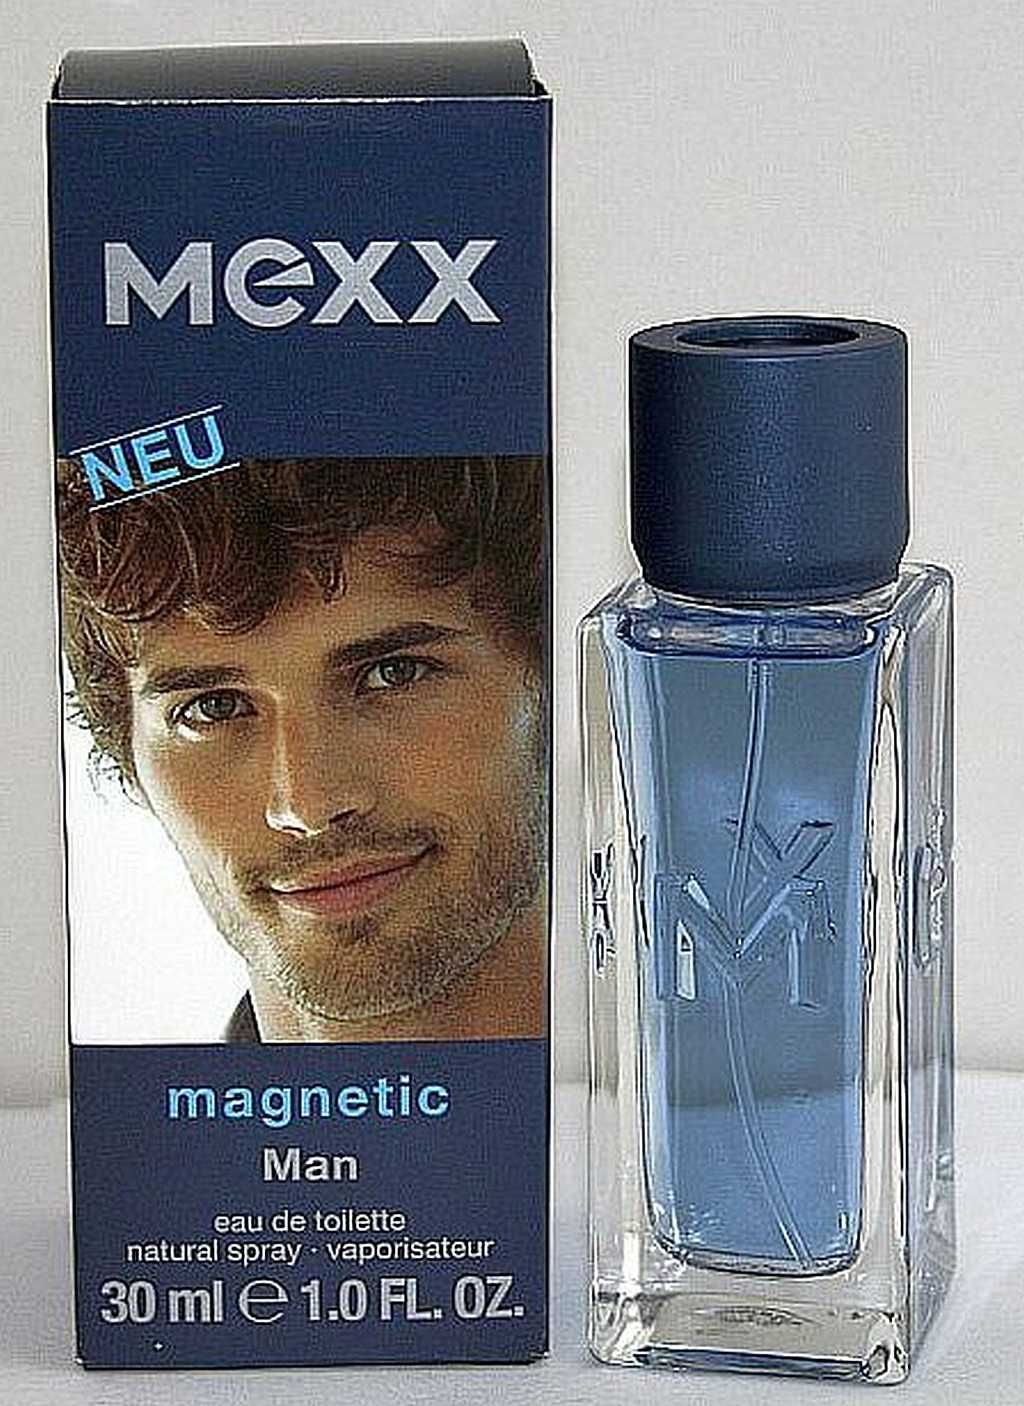 Mexx Magnetic Man EDT 30ml spray